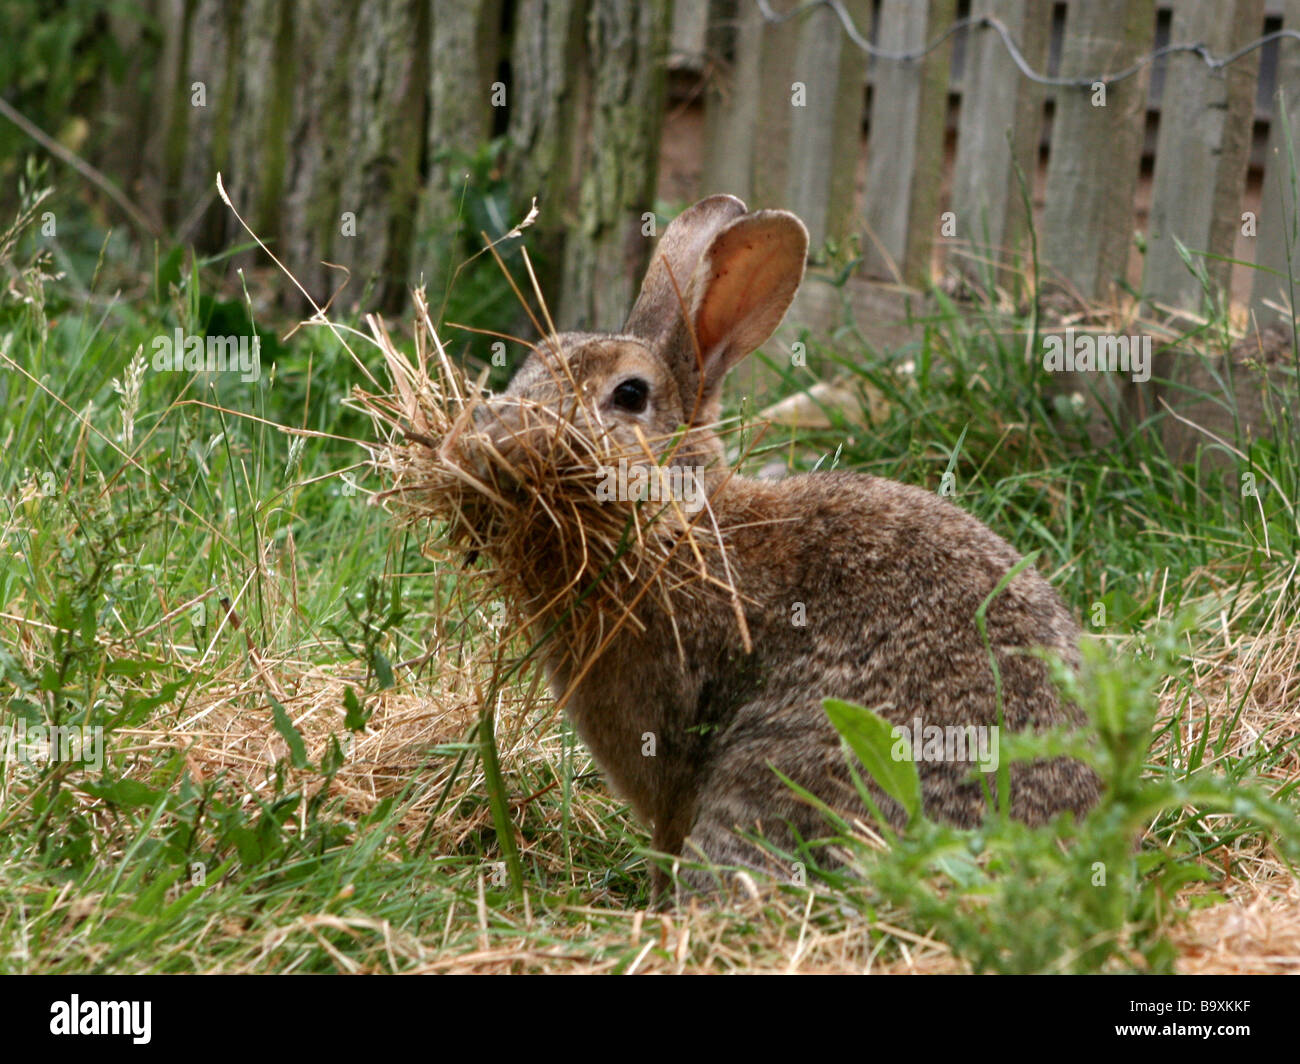 A wild rabbit nesting - building a nest. Stock Photo